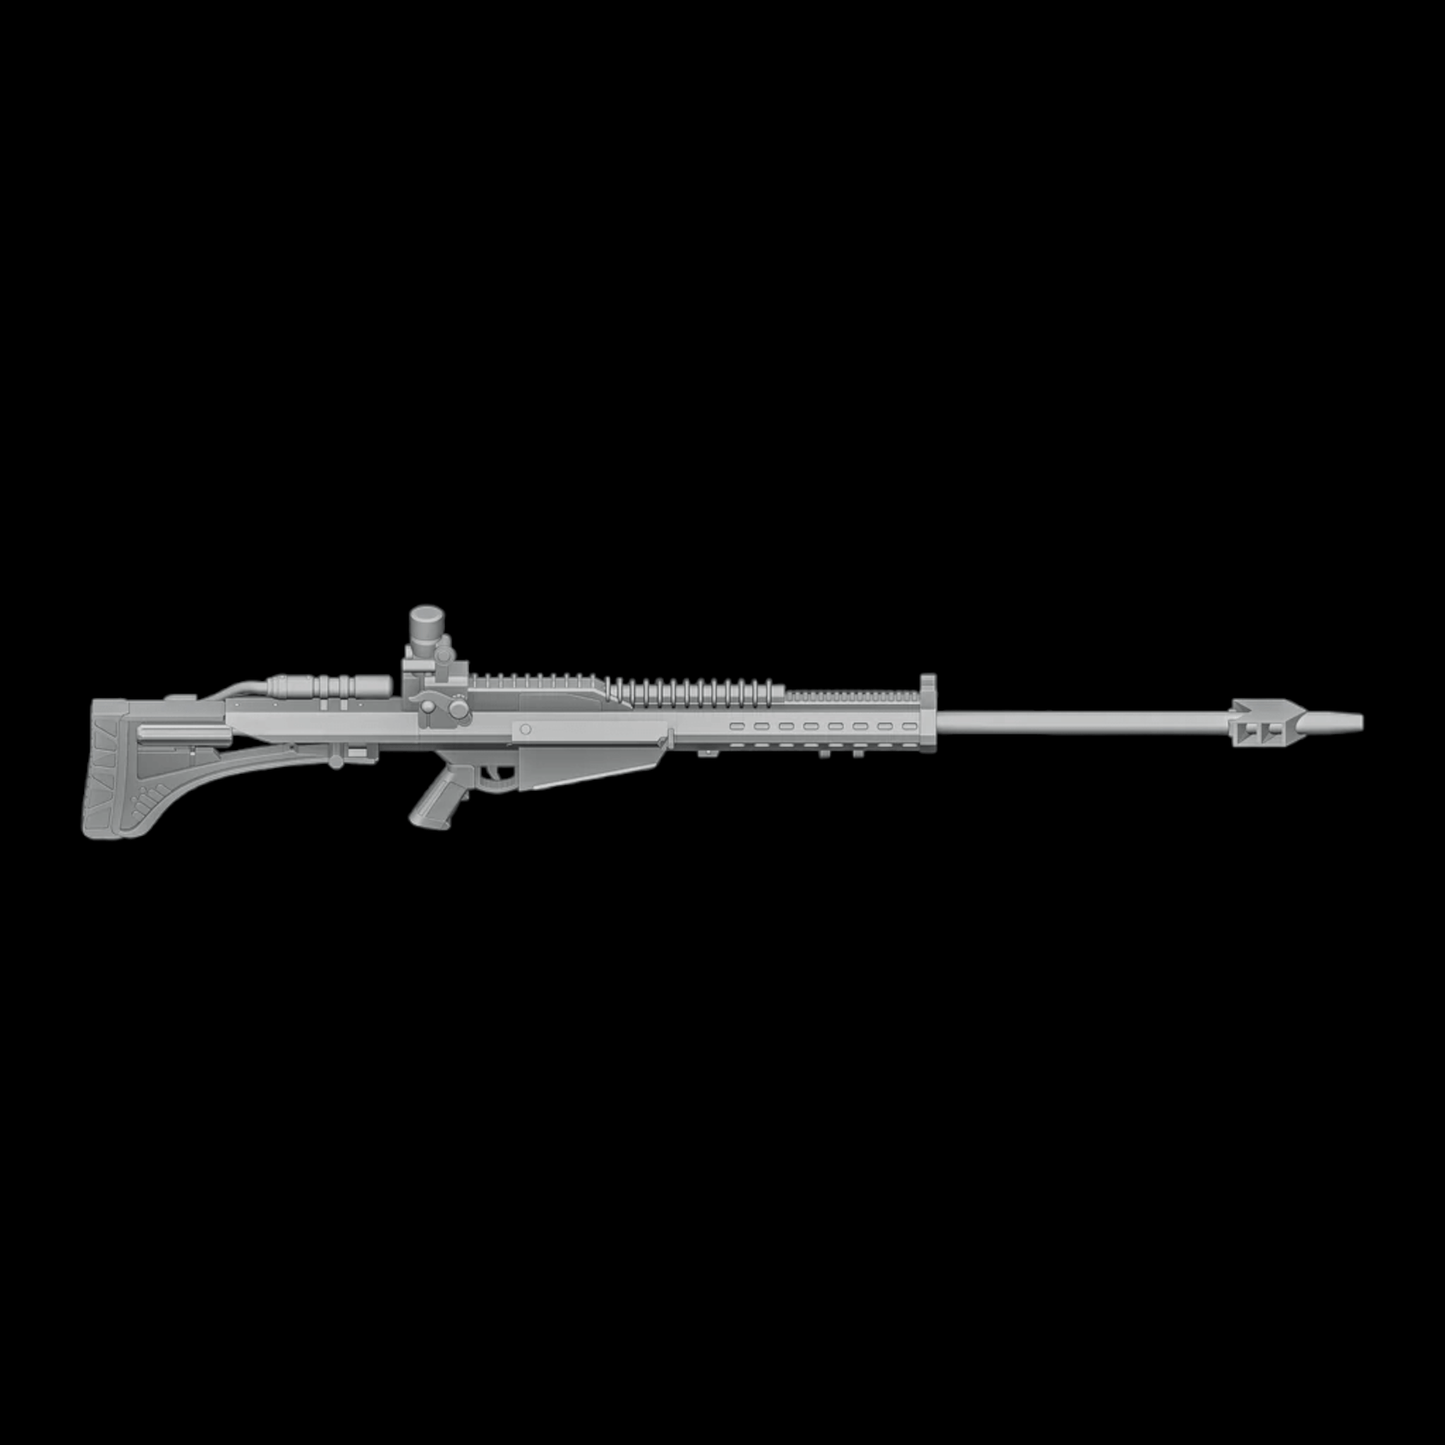 NT-242 Blaster Rifle - Printed DIY